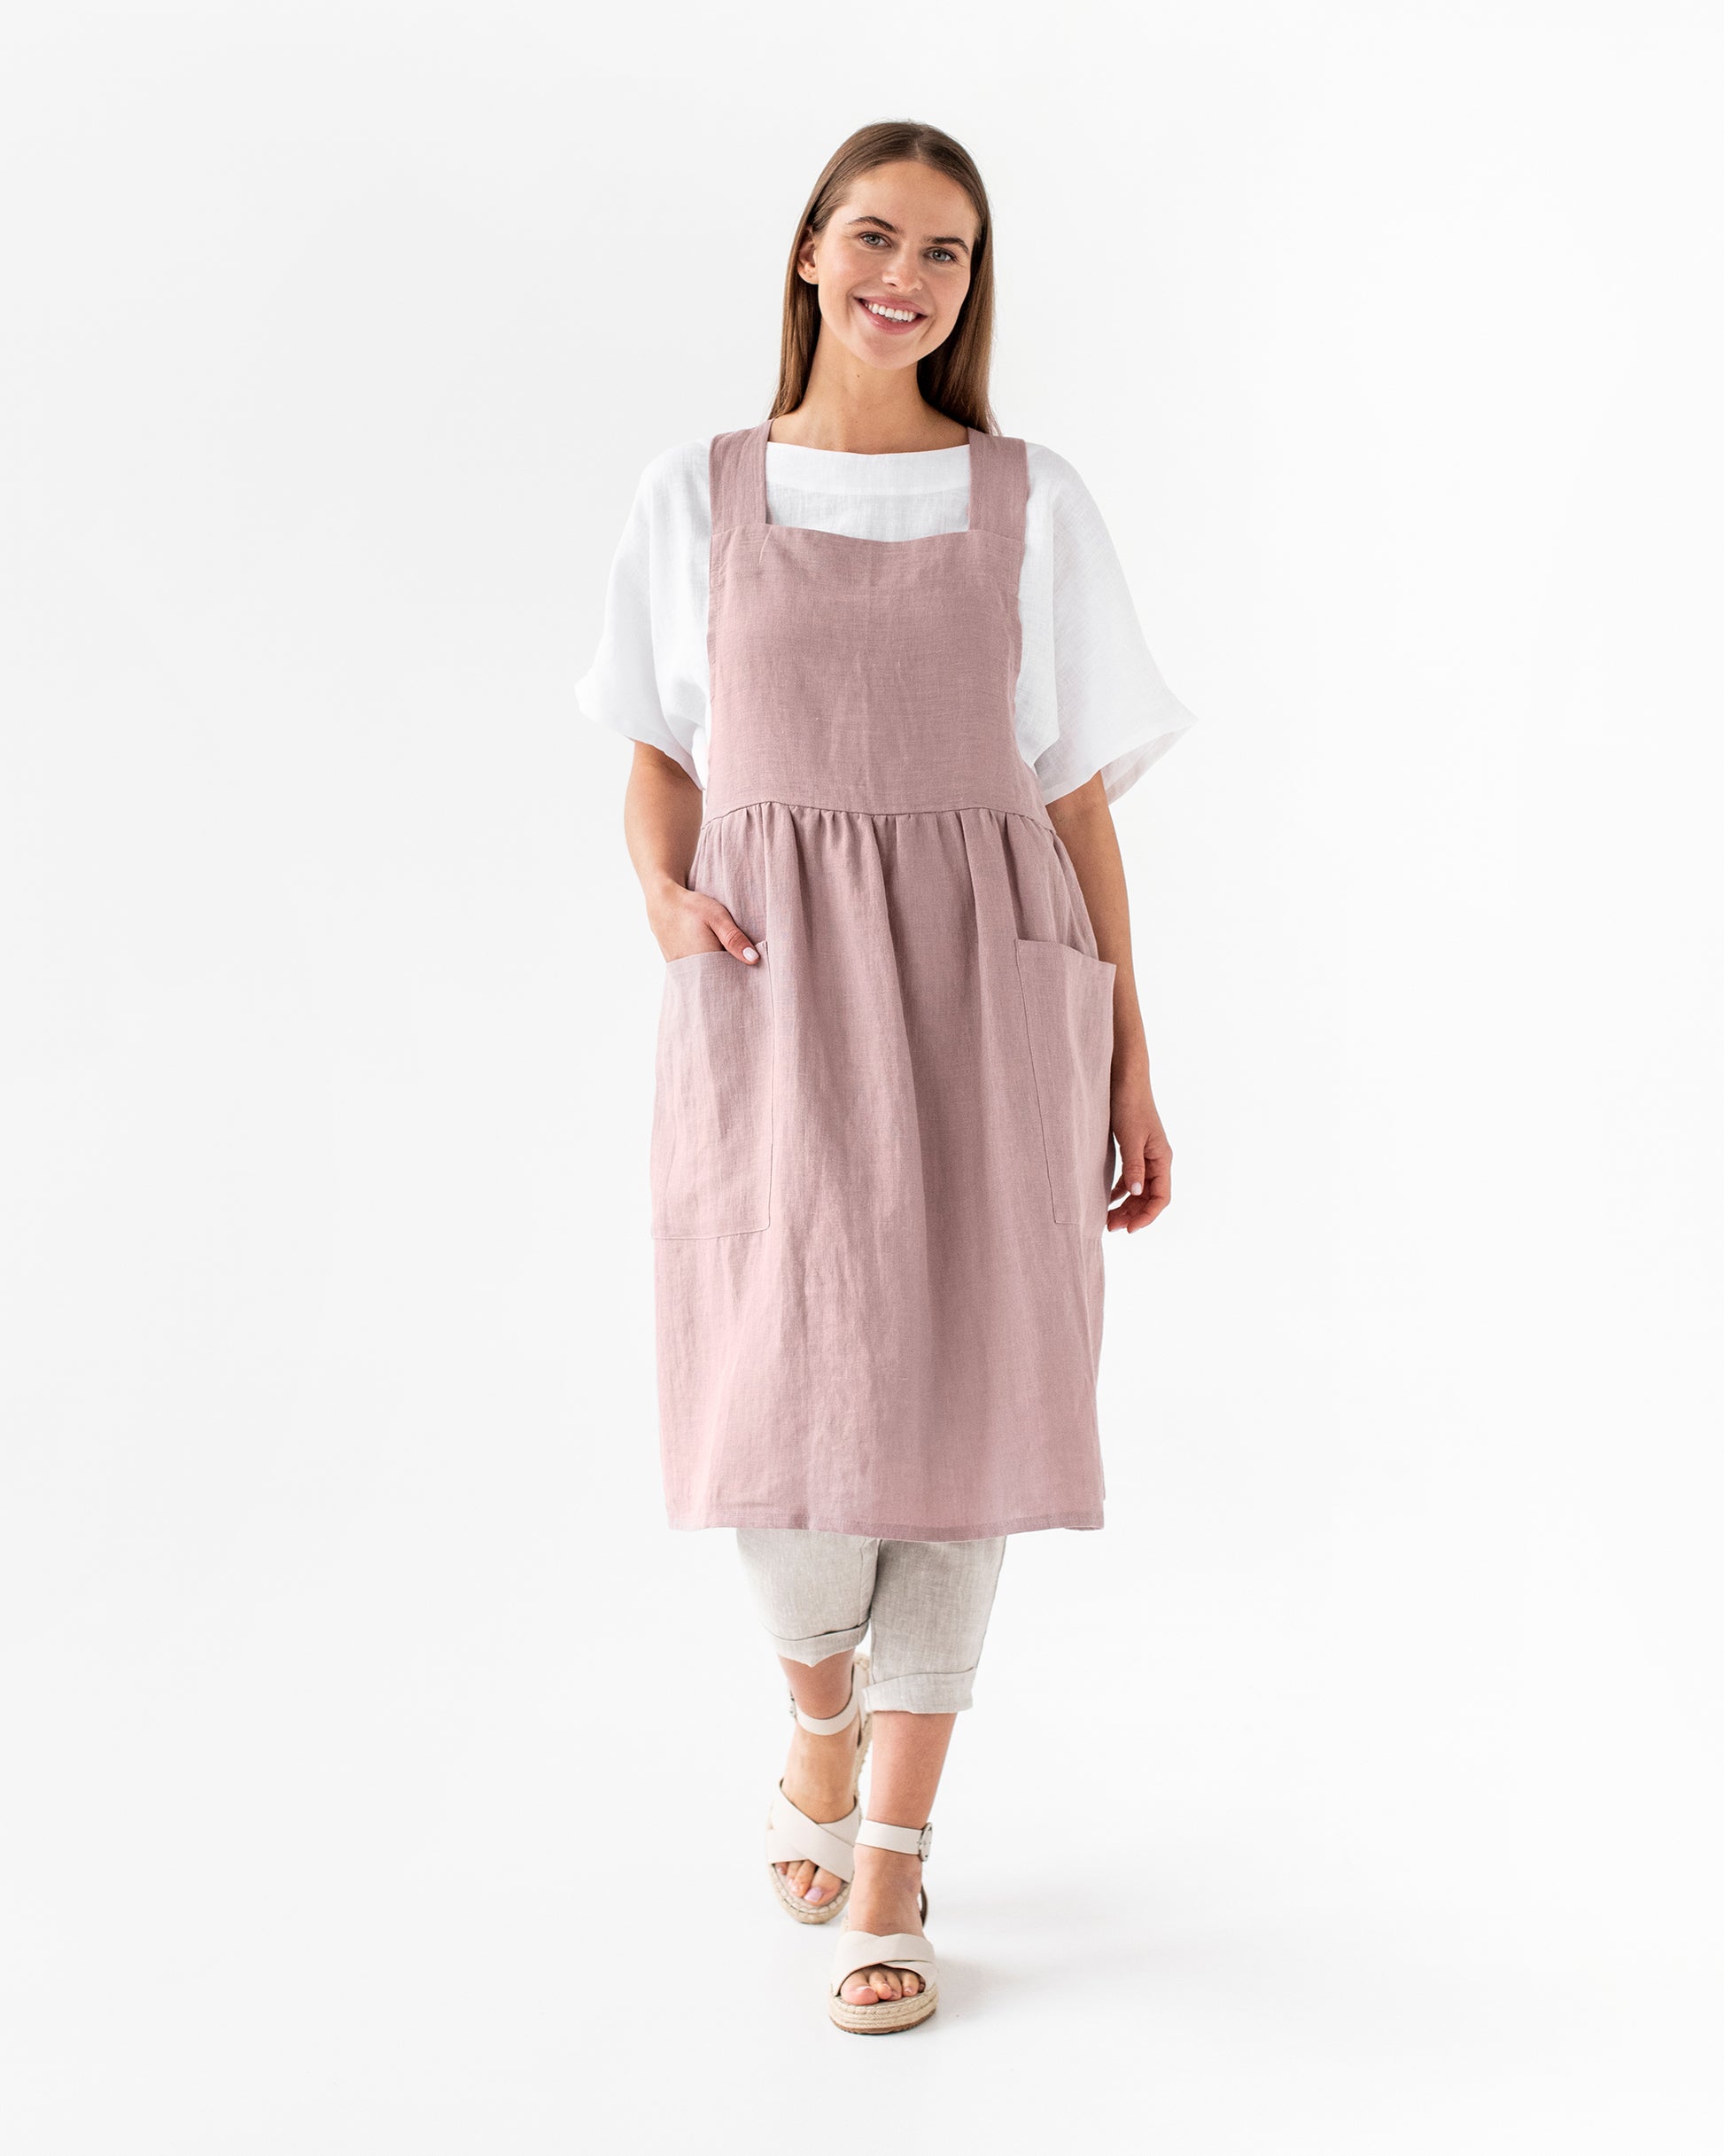 Pinafore apron dress in Woodrose - MagicLinen